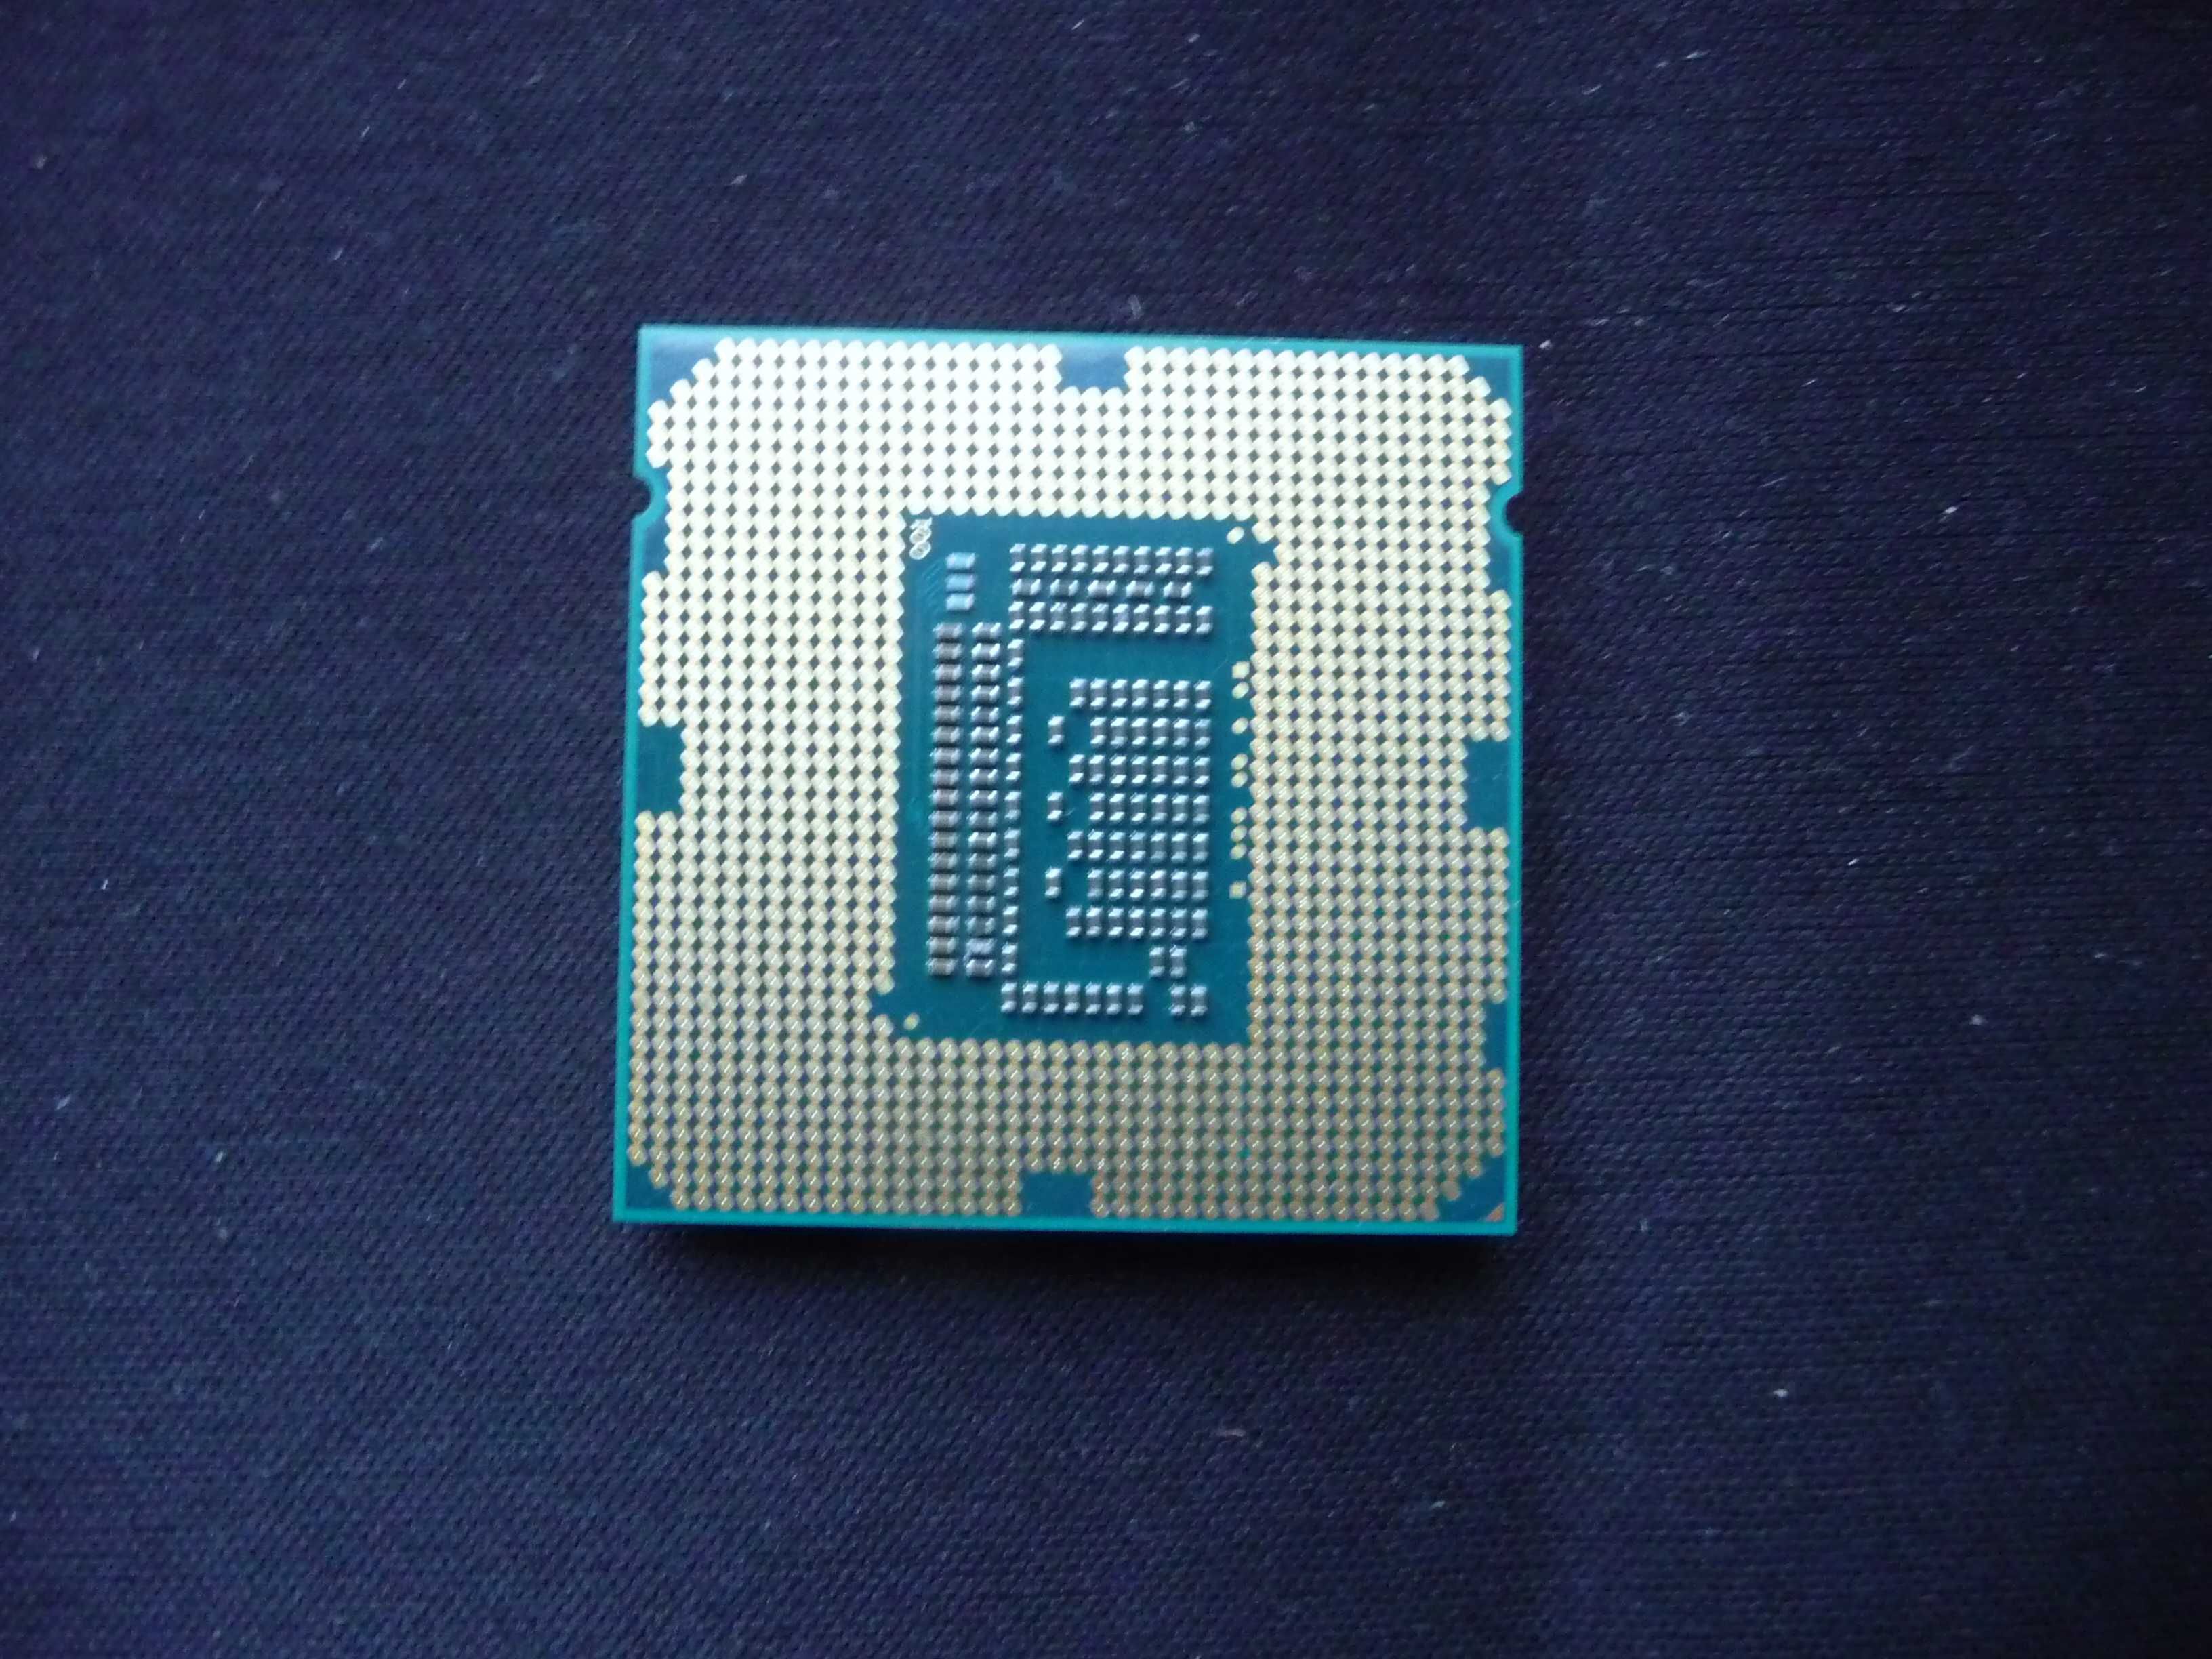 Intel Xeon E3 1230 V2 Socket 1155 (i7 3770)